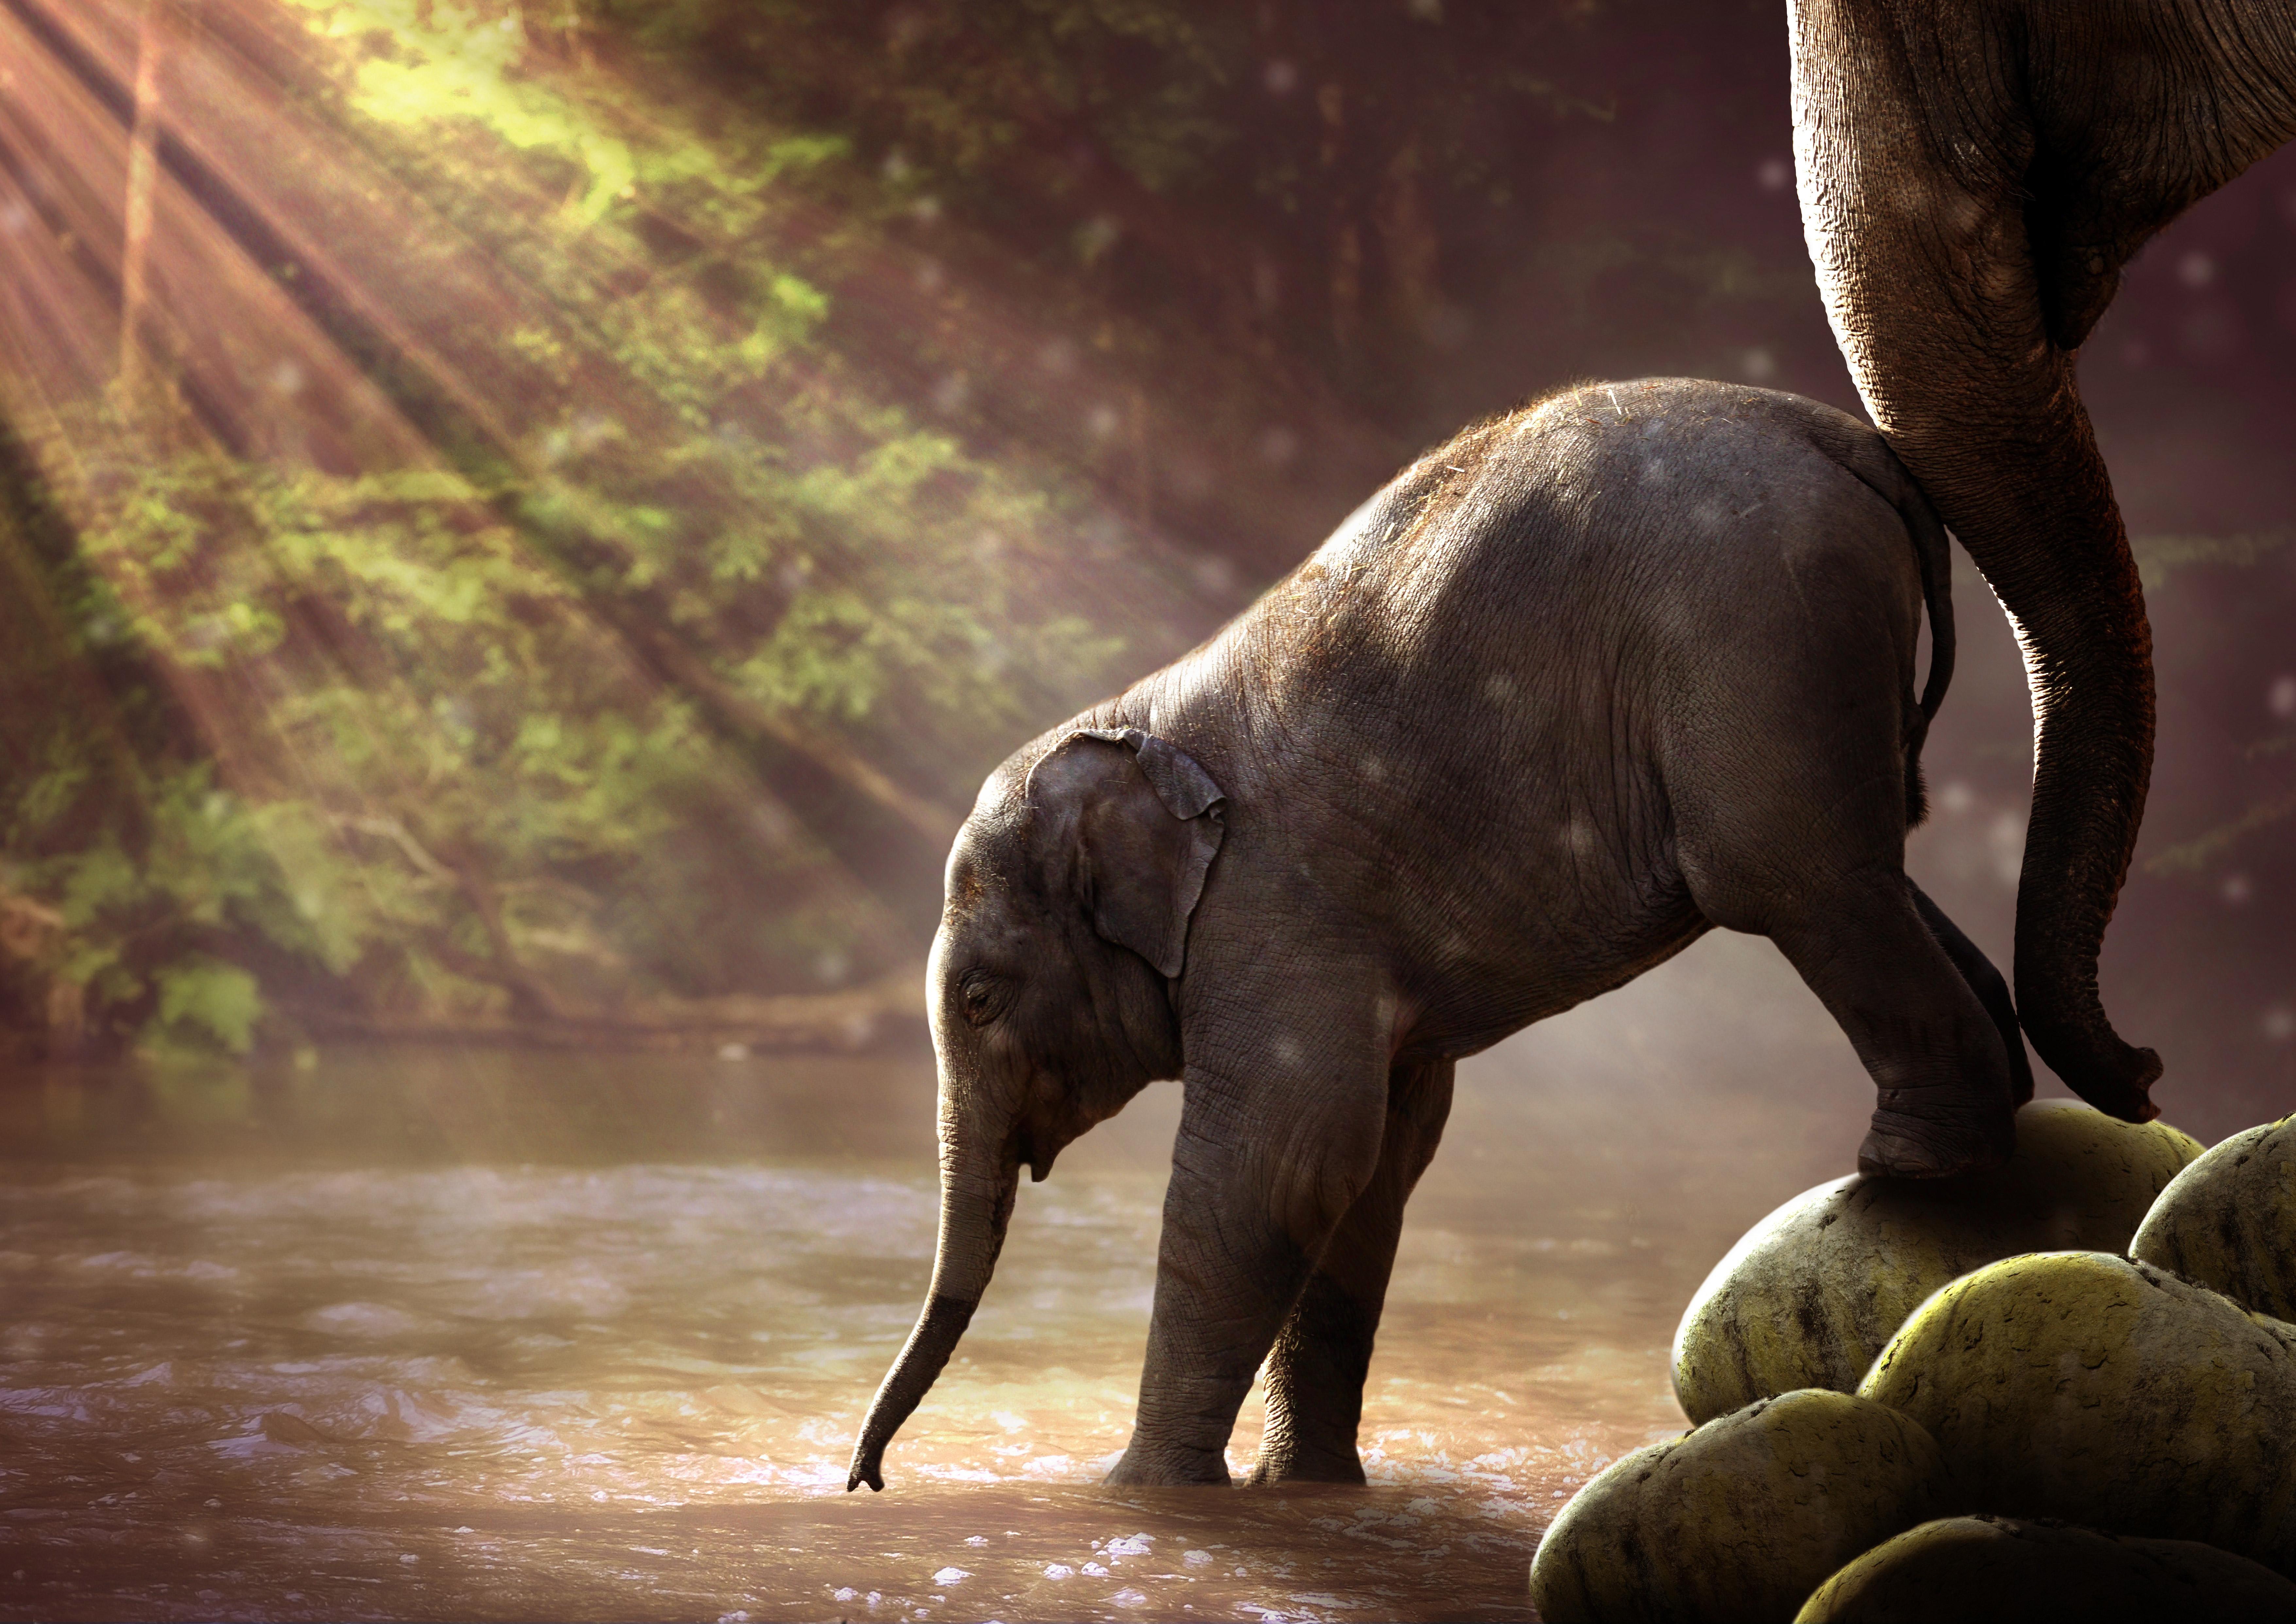 Baby Elephant Drinking Water, HD Animals, 4k Wallpaper, Image